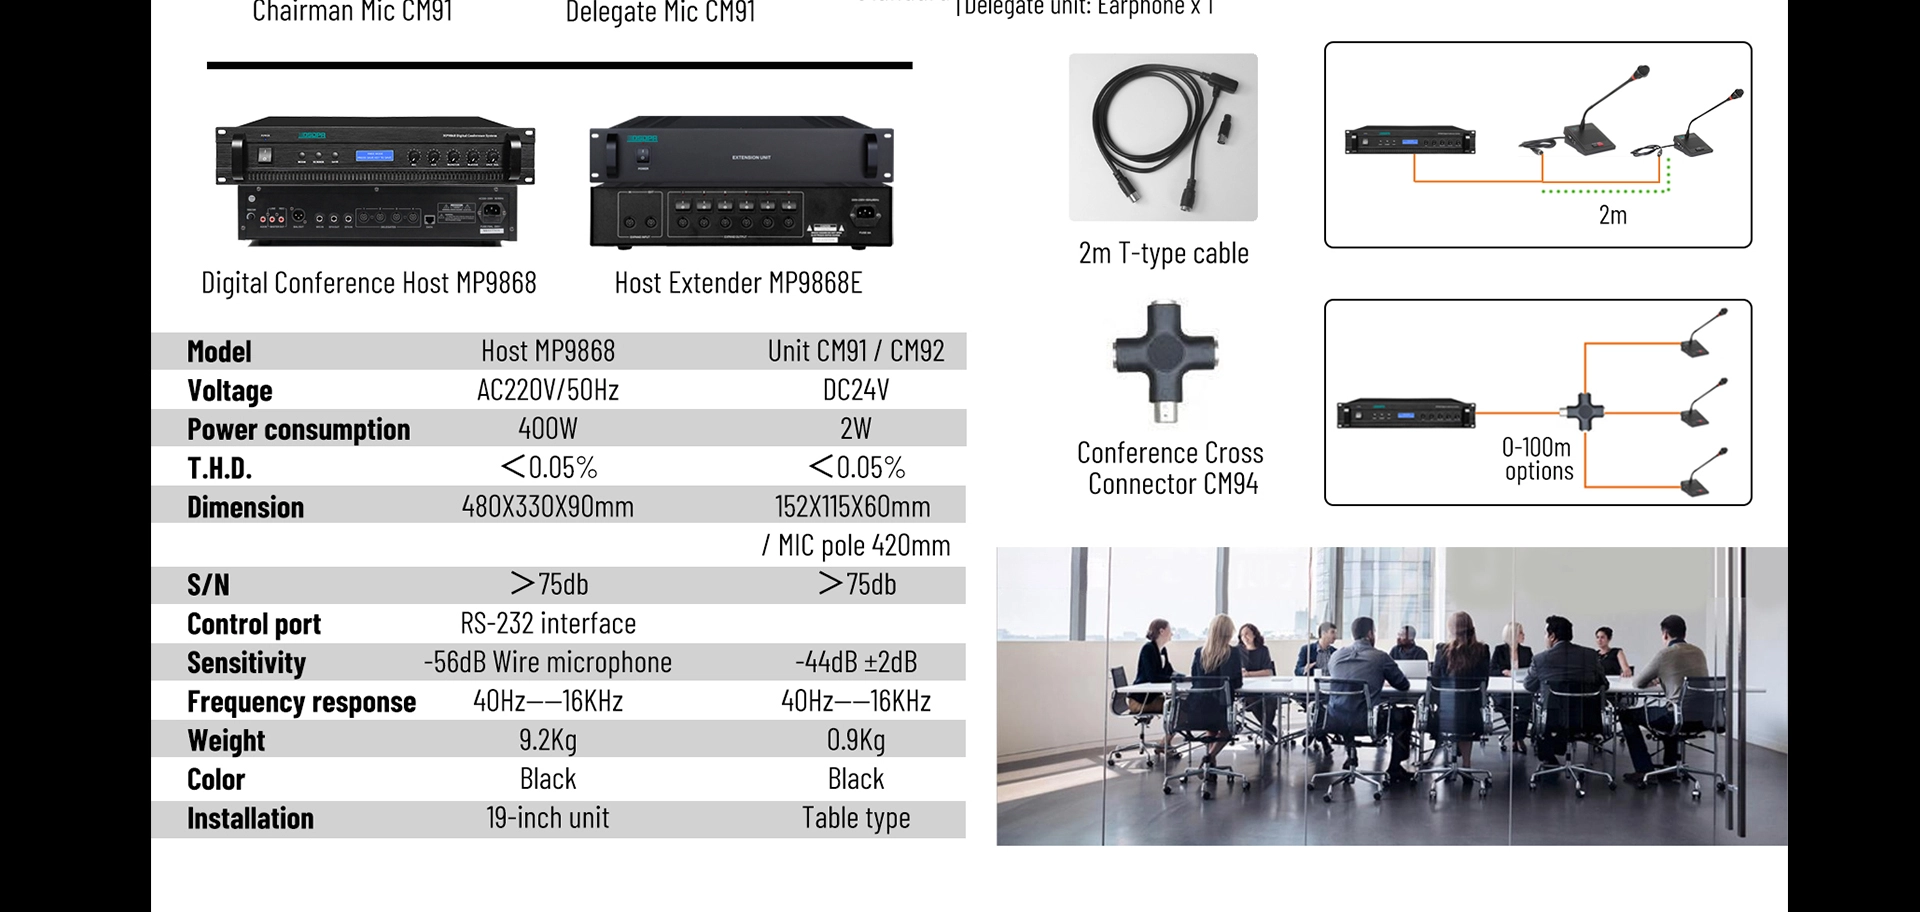 Digital Conference System Delegate Microphone with built-in speaker